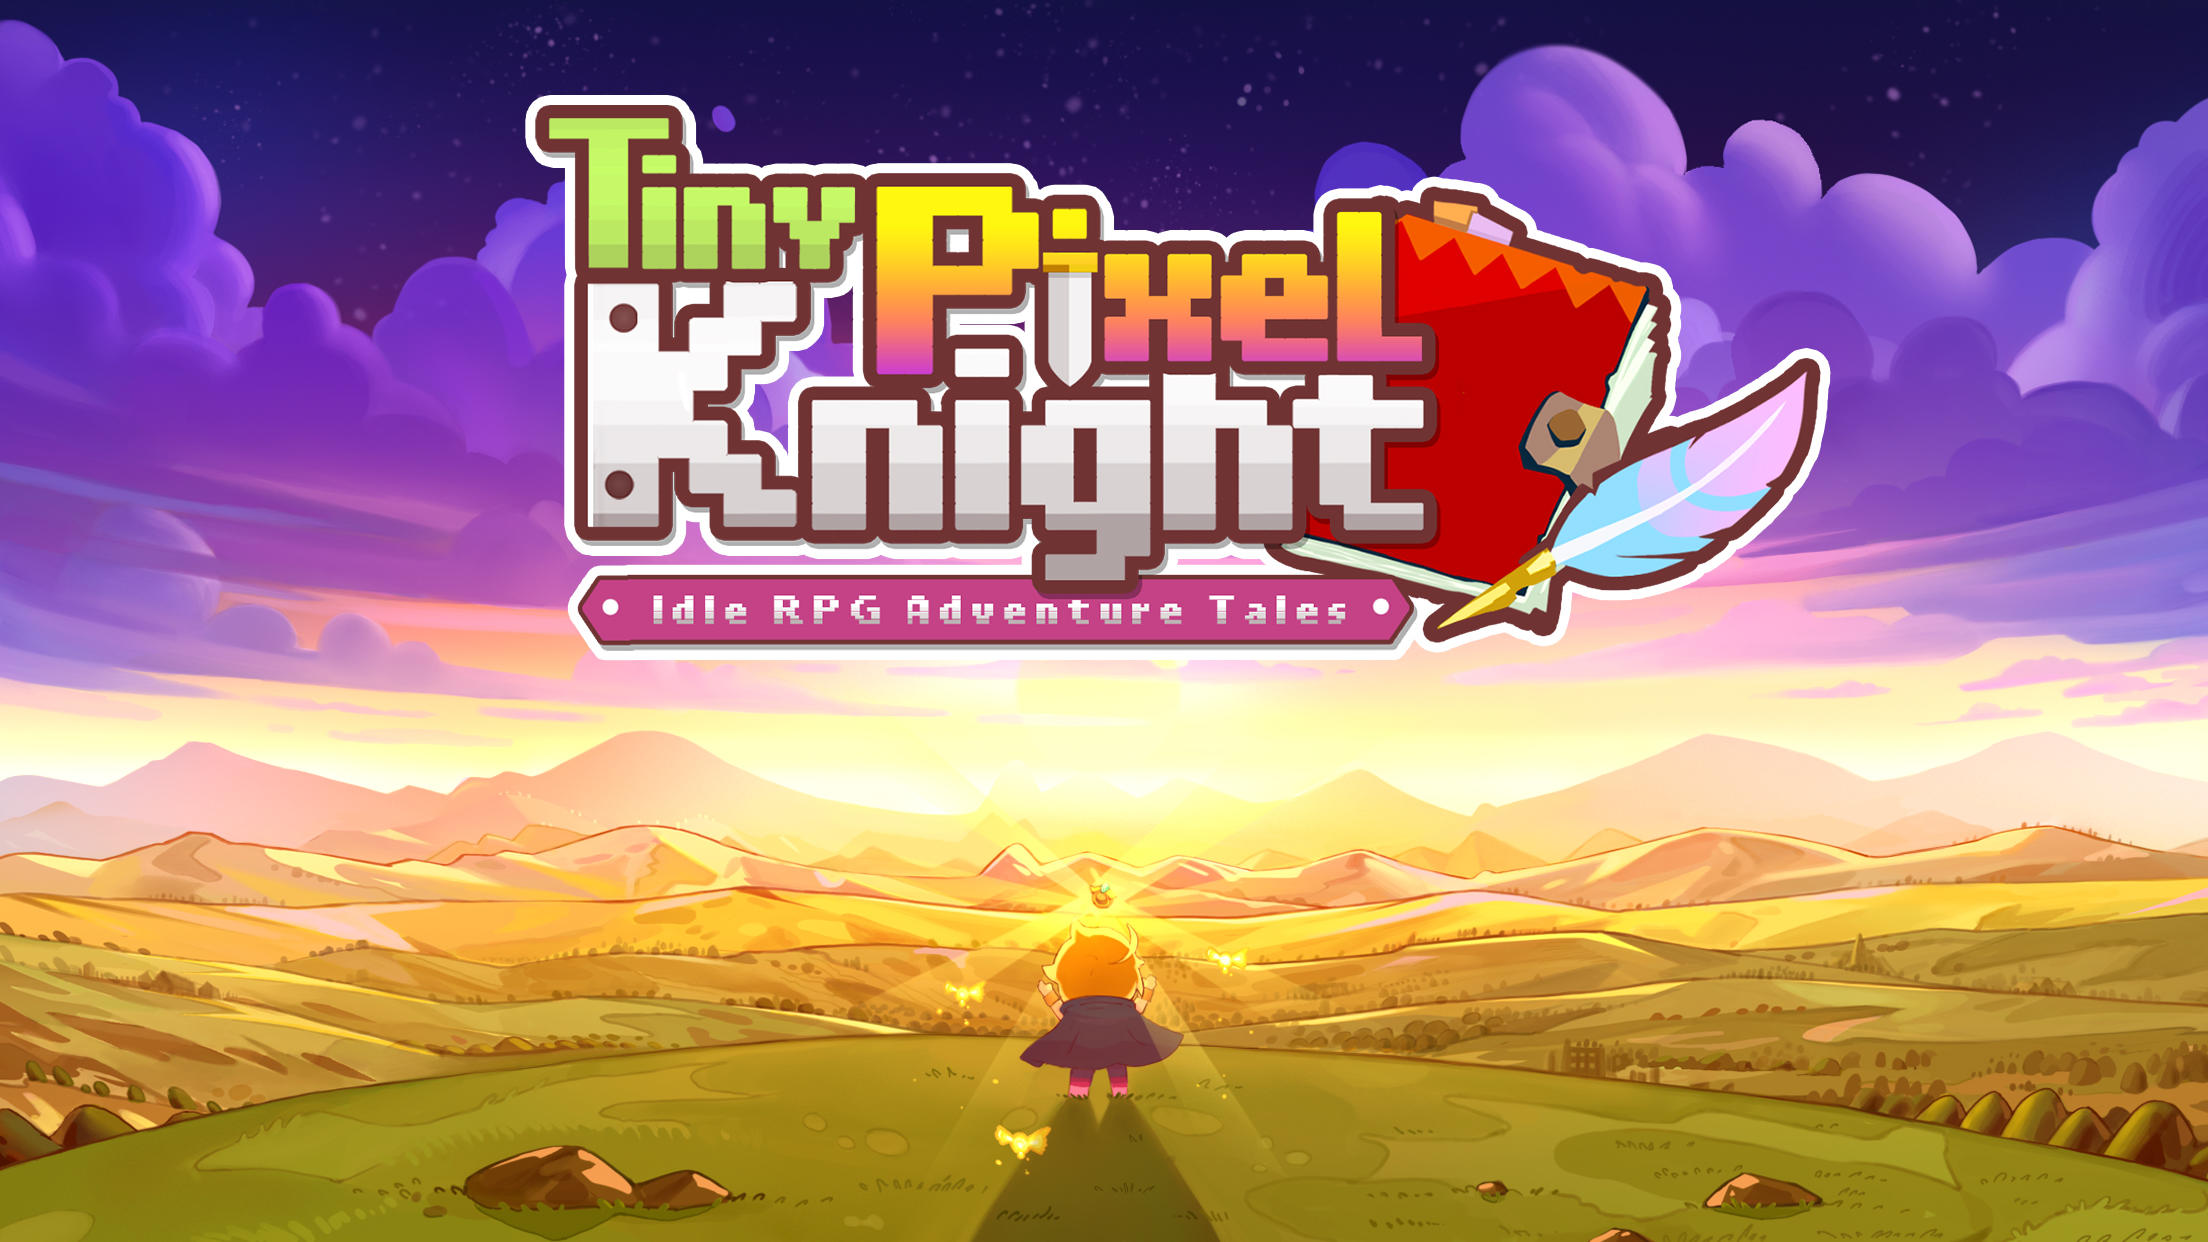 Screenshot 1 of Tiny Pixel Knight - រឿងនិទានផ្សងព្រេង RPG ទំនេរ 1.1.5